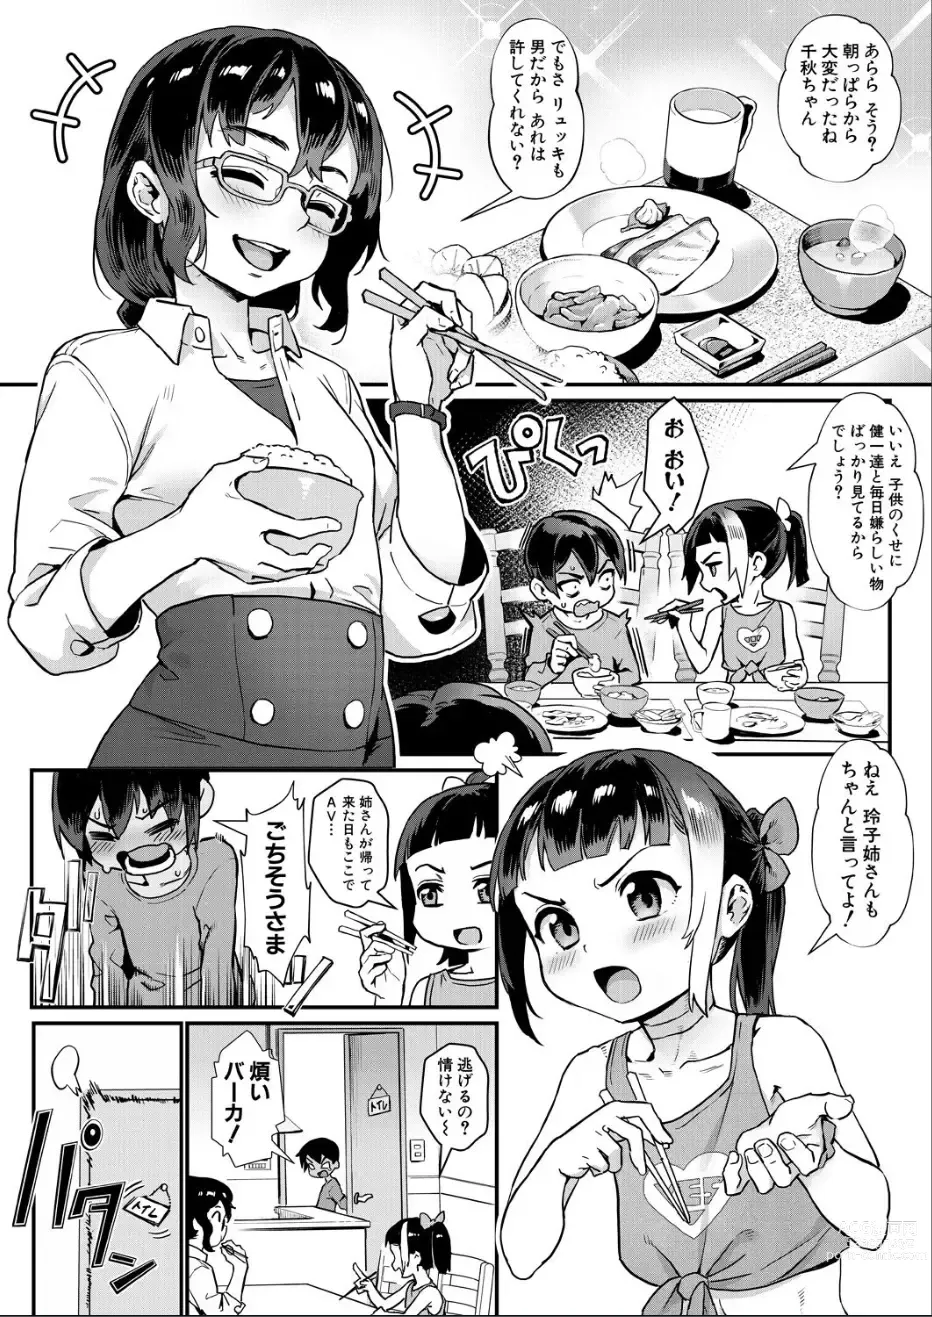 Page 8 of manga 少年が大人になった夏〈第3話 彼女達の勝負〉